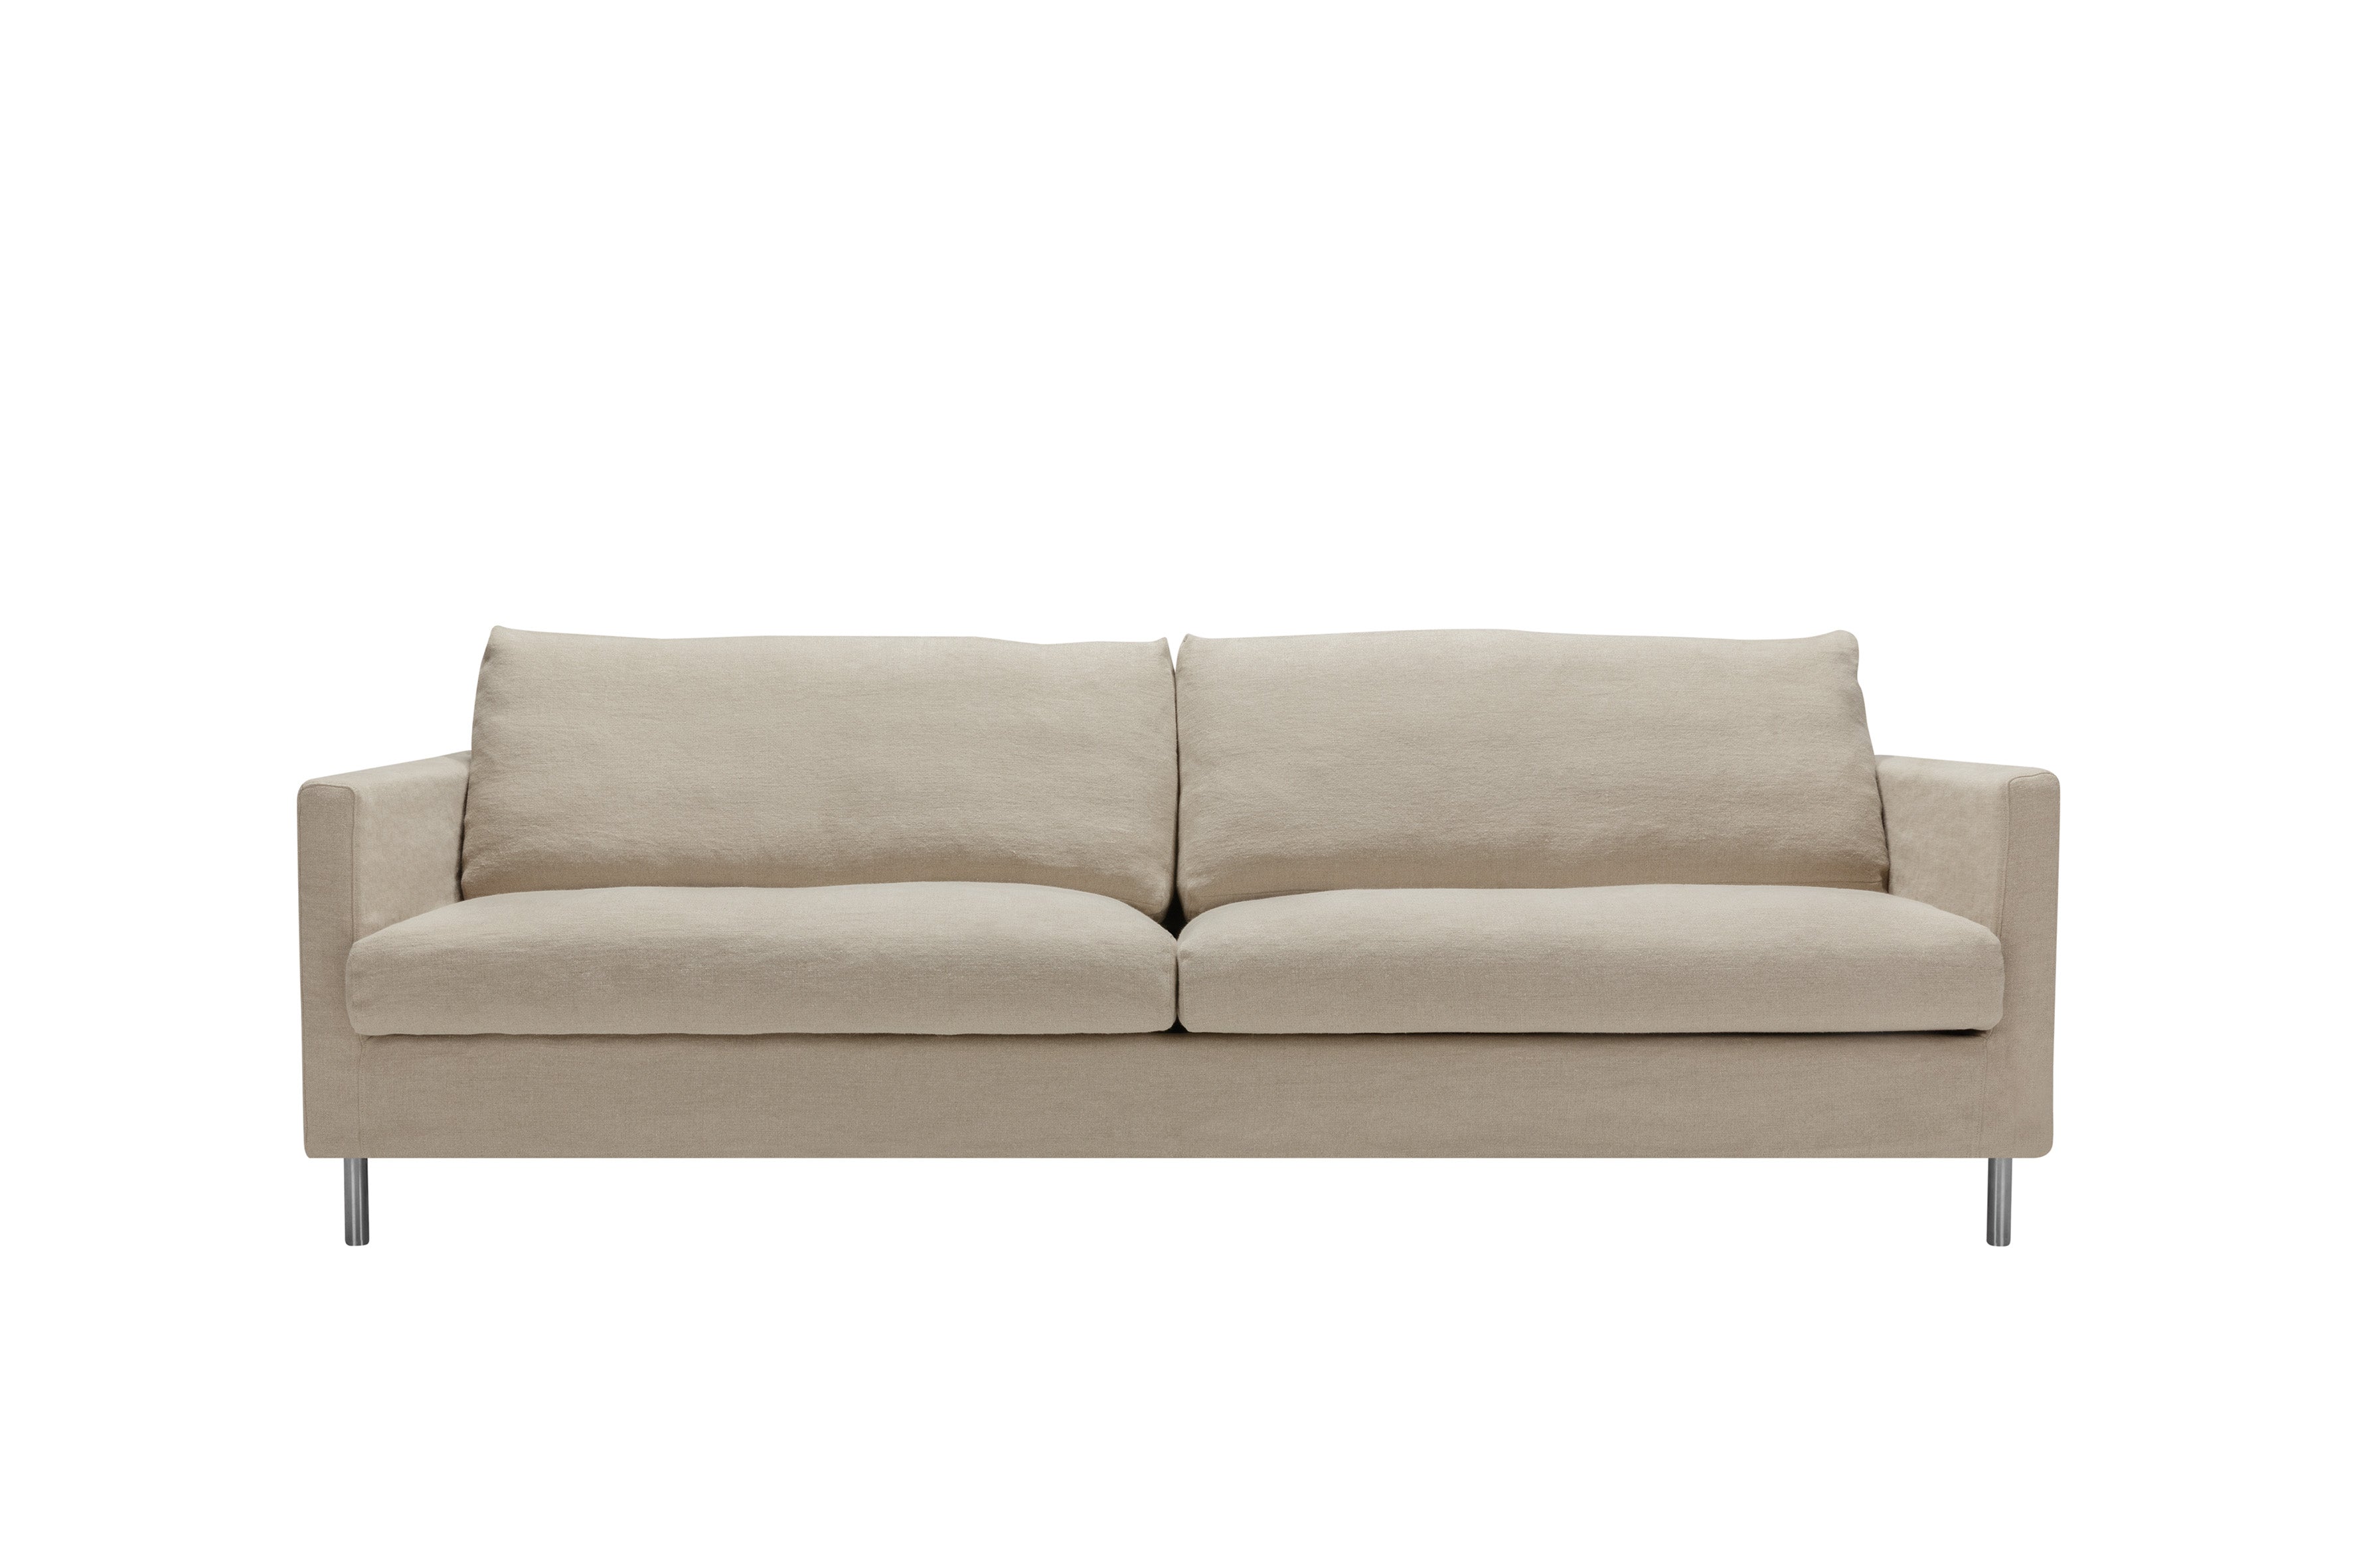 Mastrella Imilia 4 Seater Sofa (two parts)